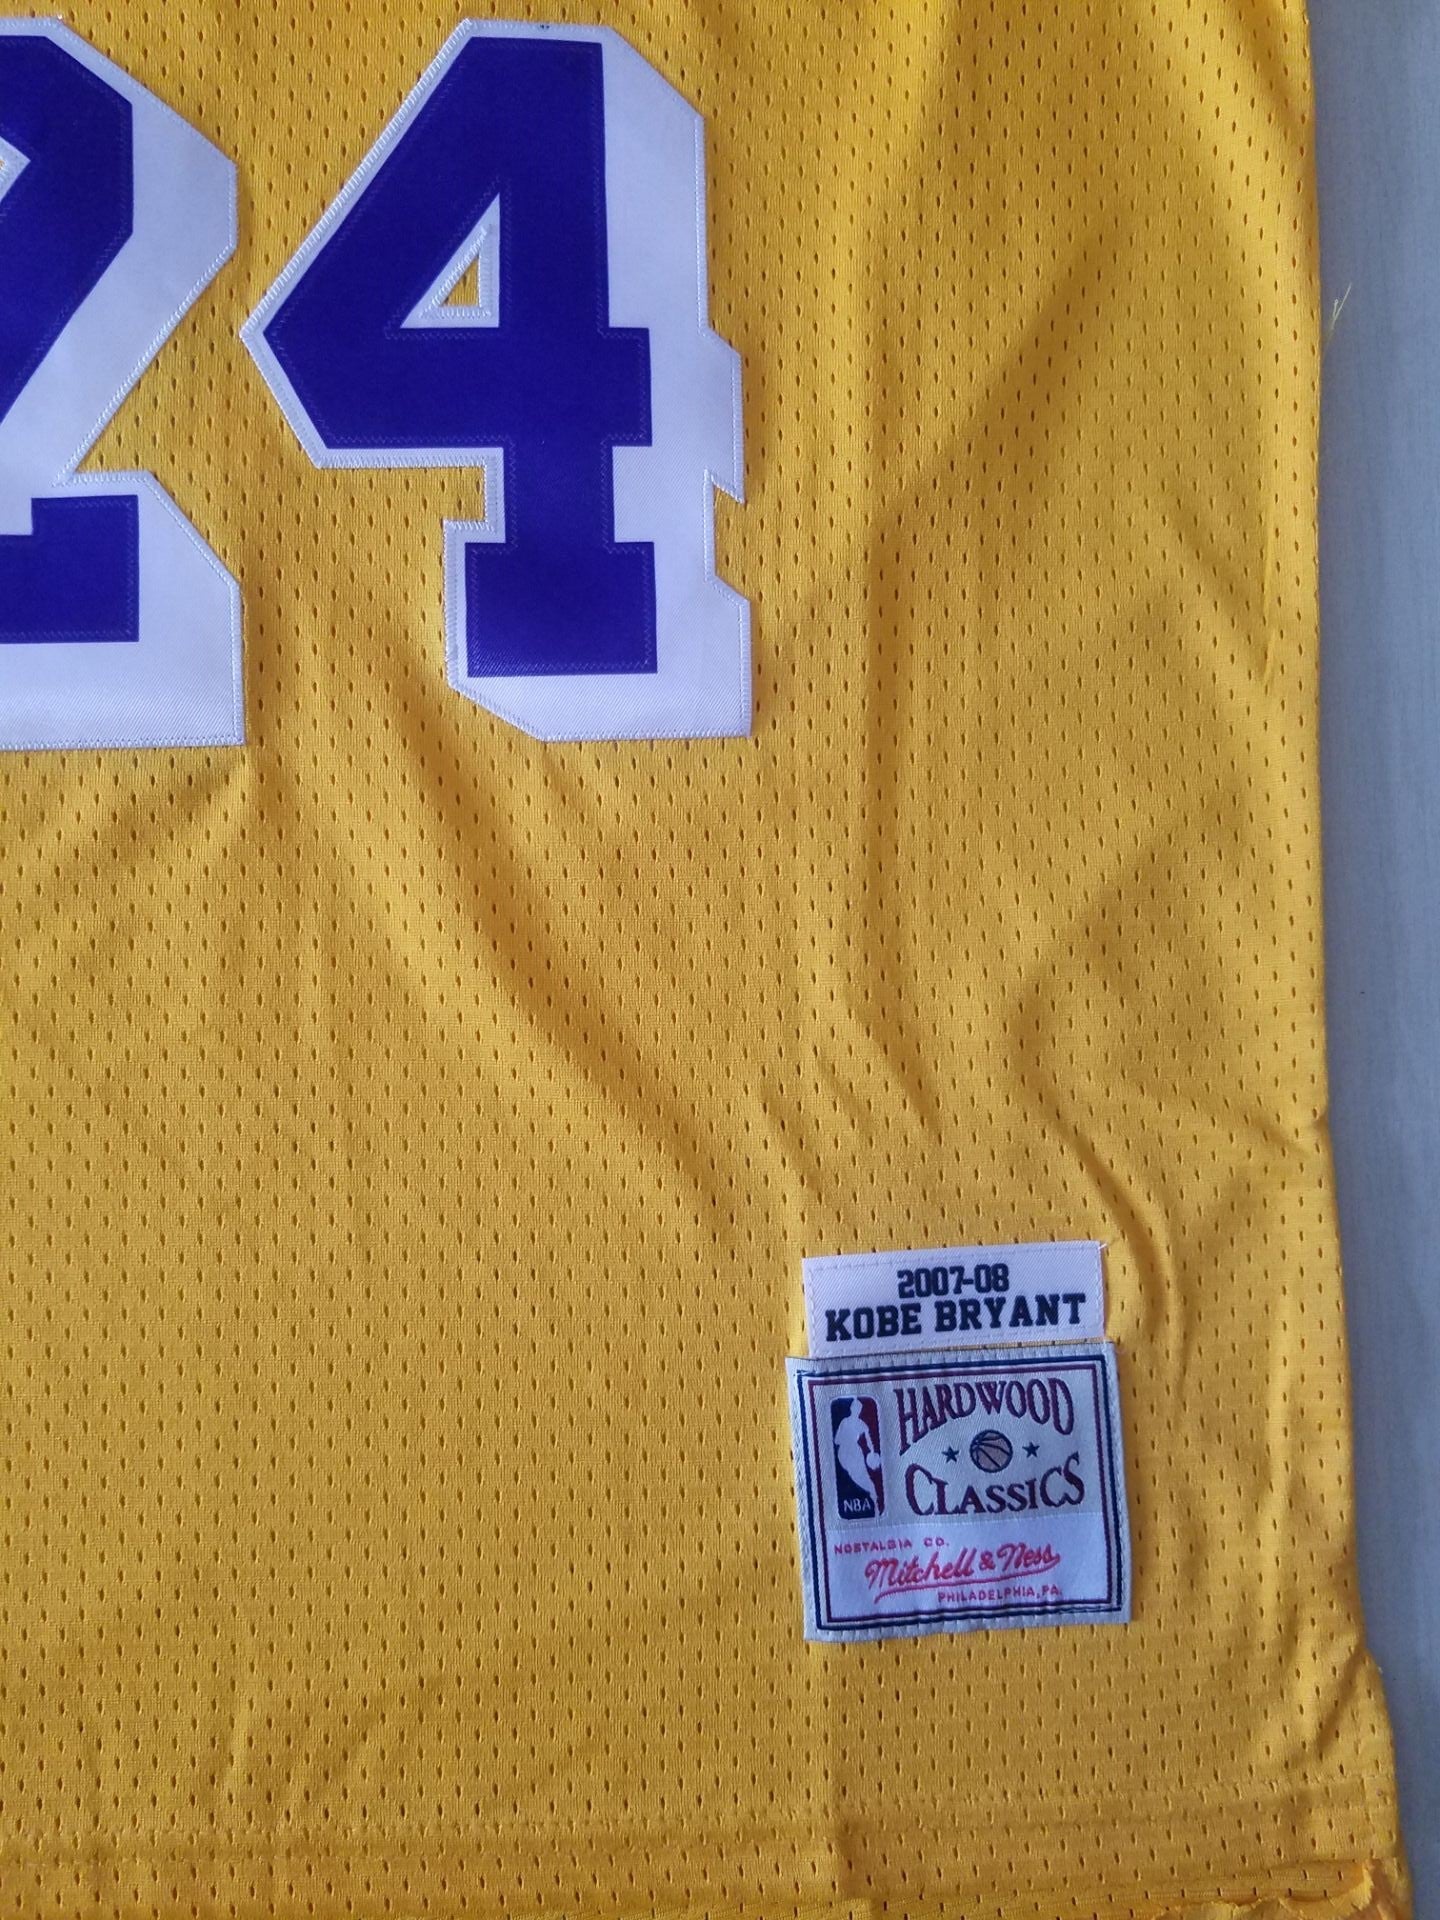 Kobe Bryant Los Angeles Lakers #24 NBA Jersey - Retro Yellow